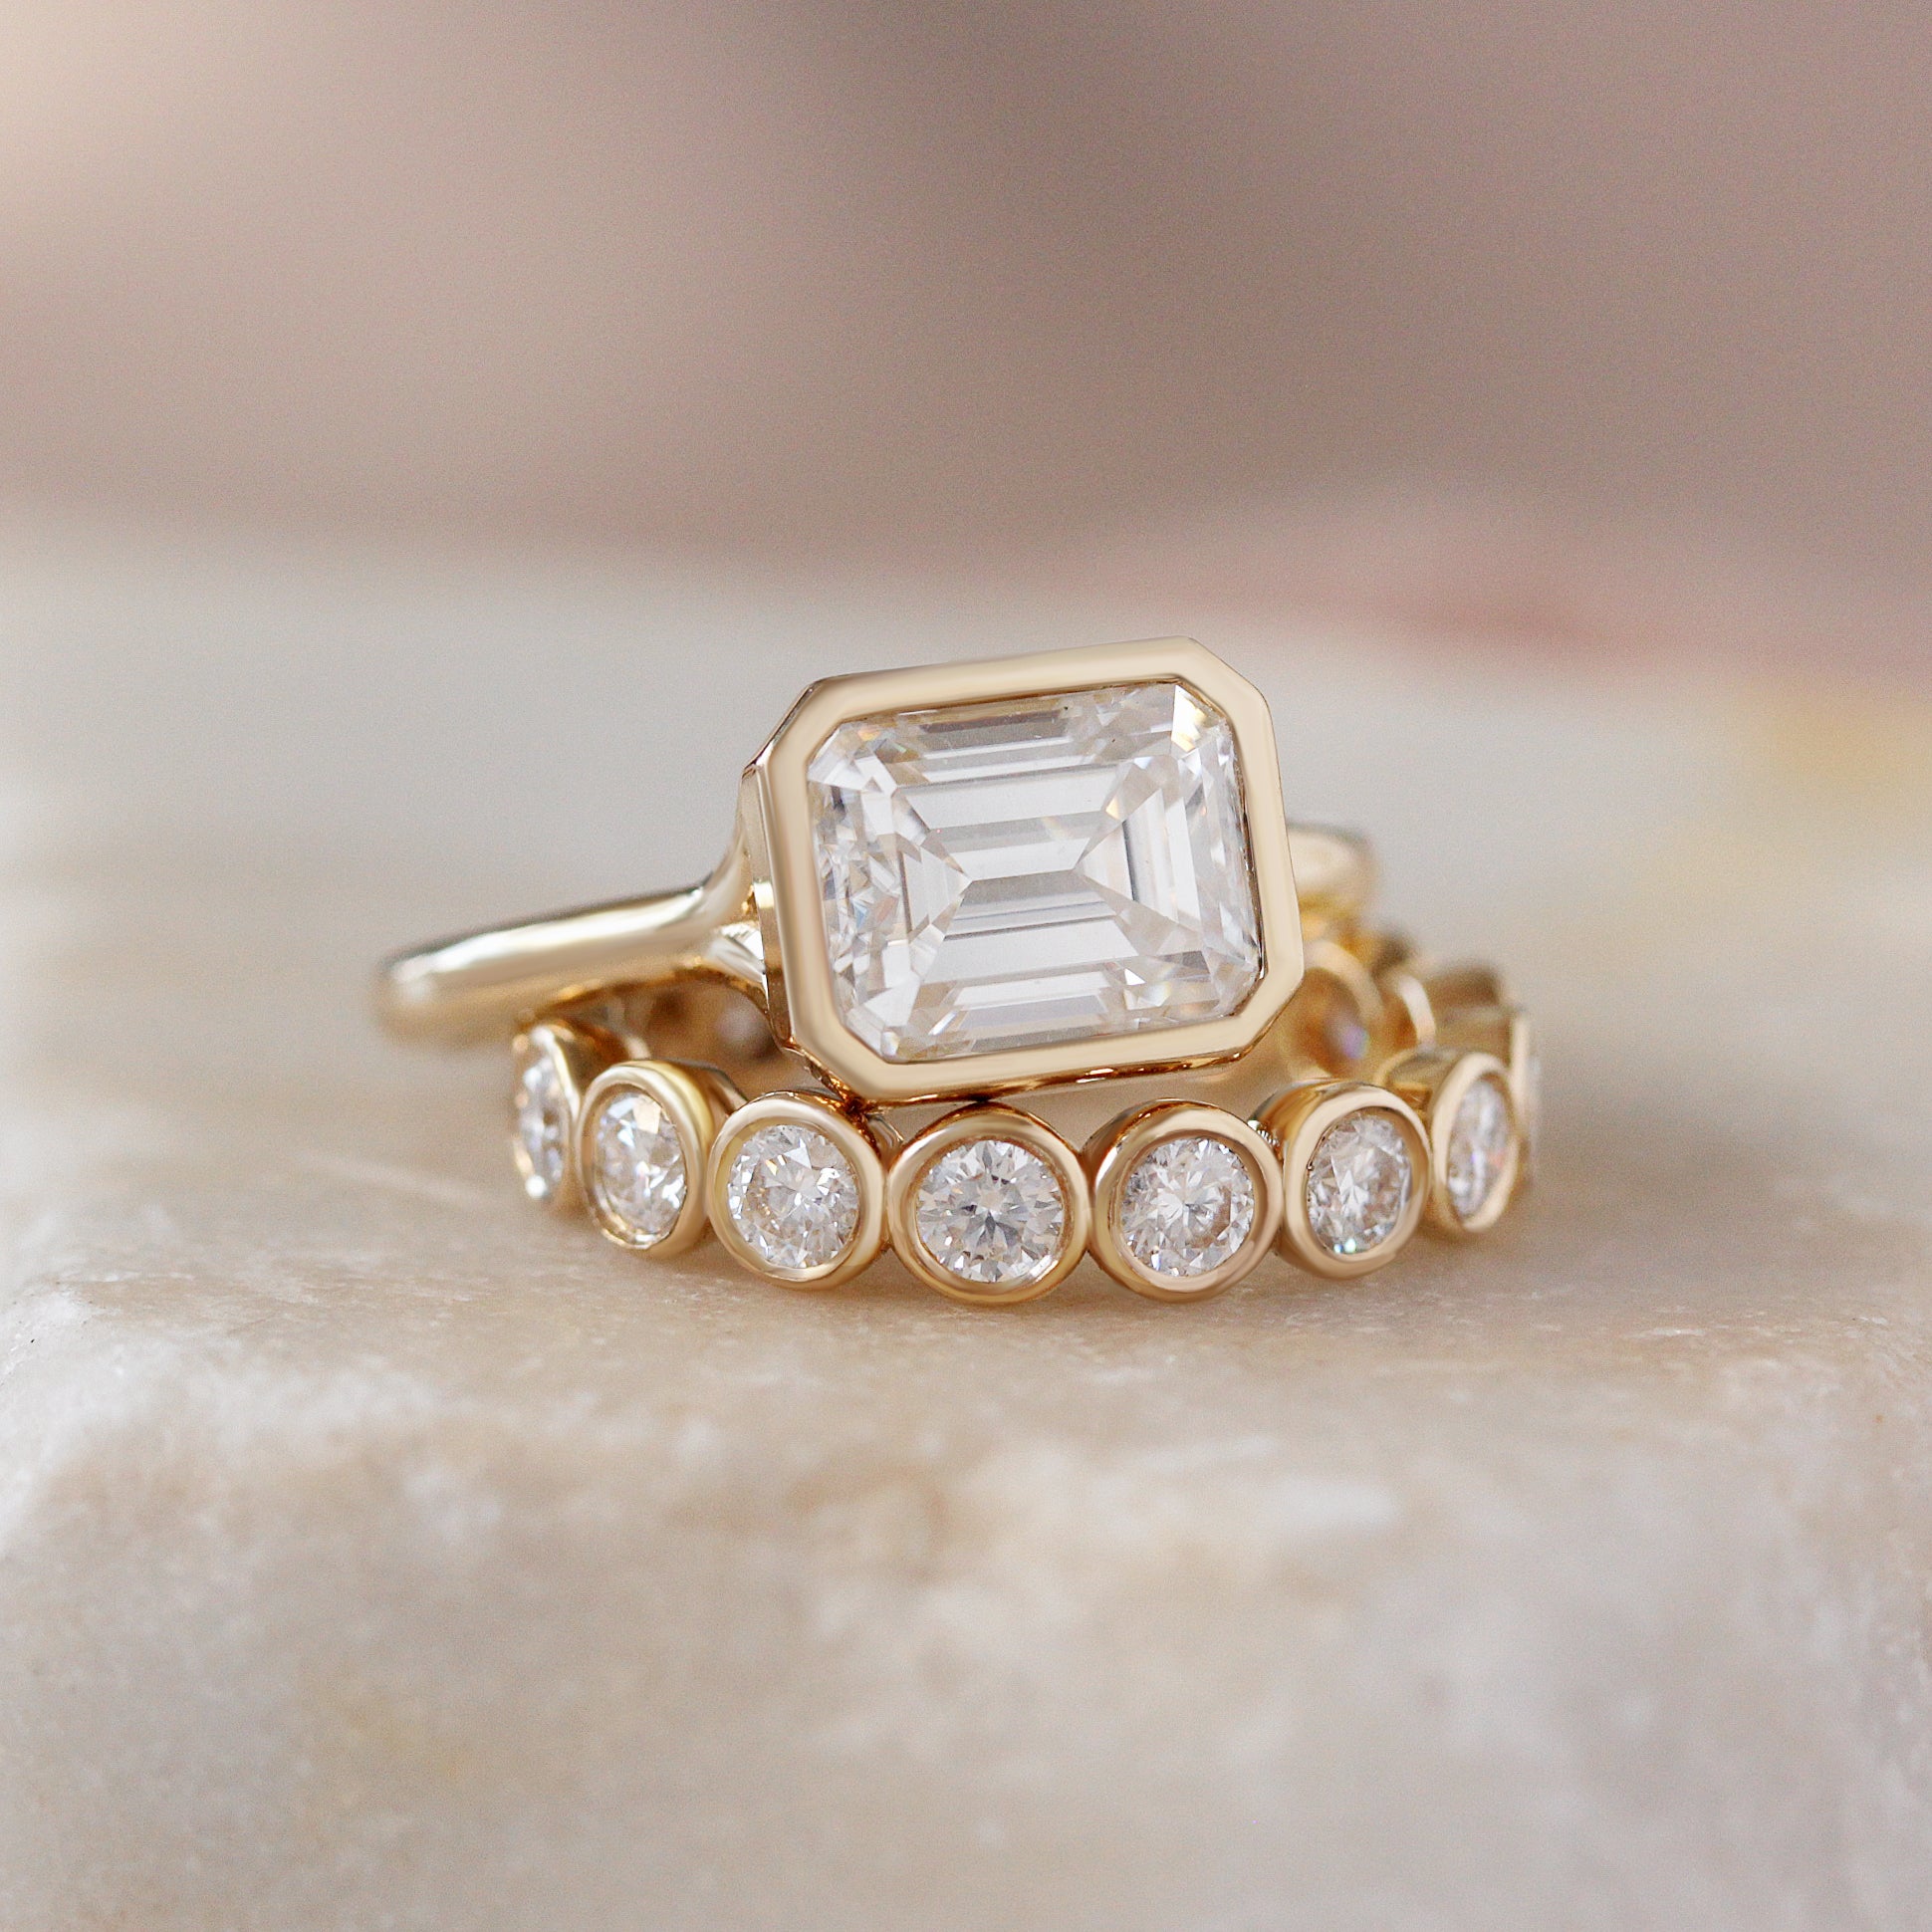 East West Emerald Cut Solitaire Bezel Set Diamond Engagement Ring - Jade